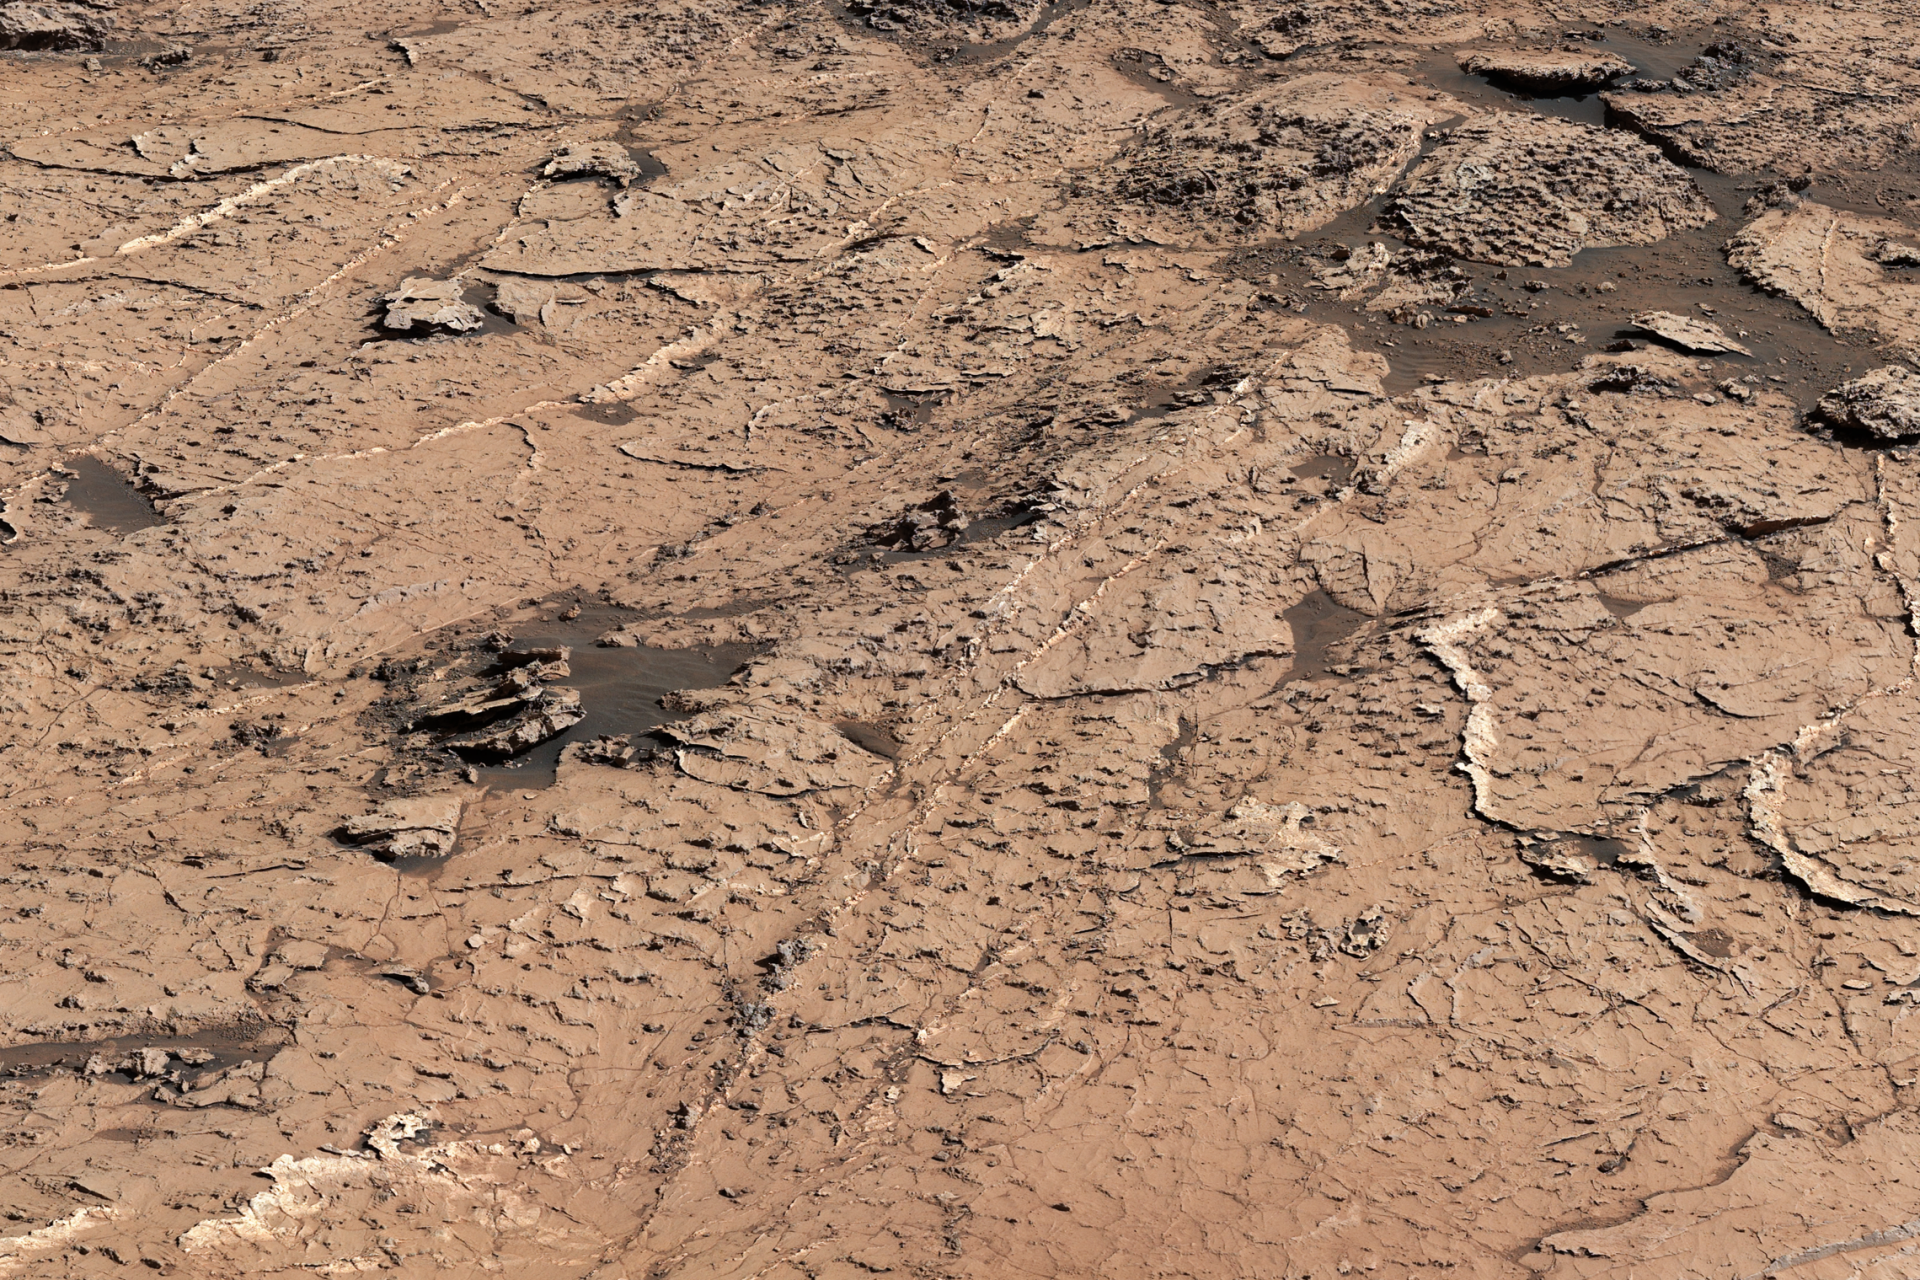 Did Mars once harbor life?